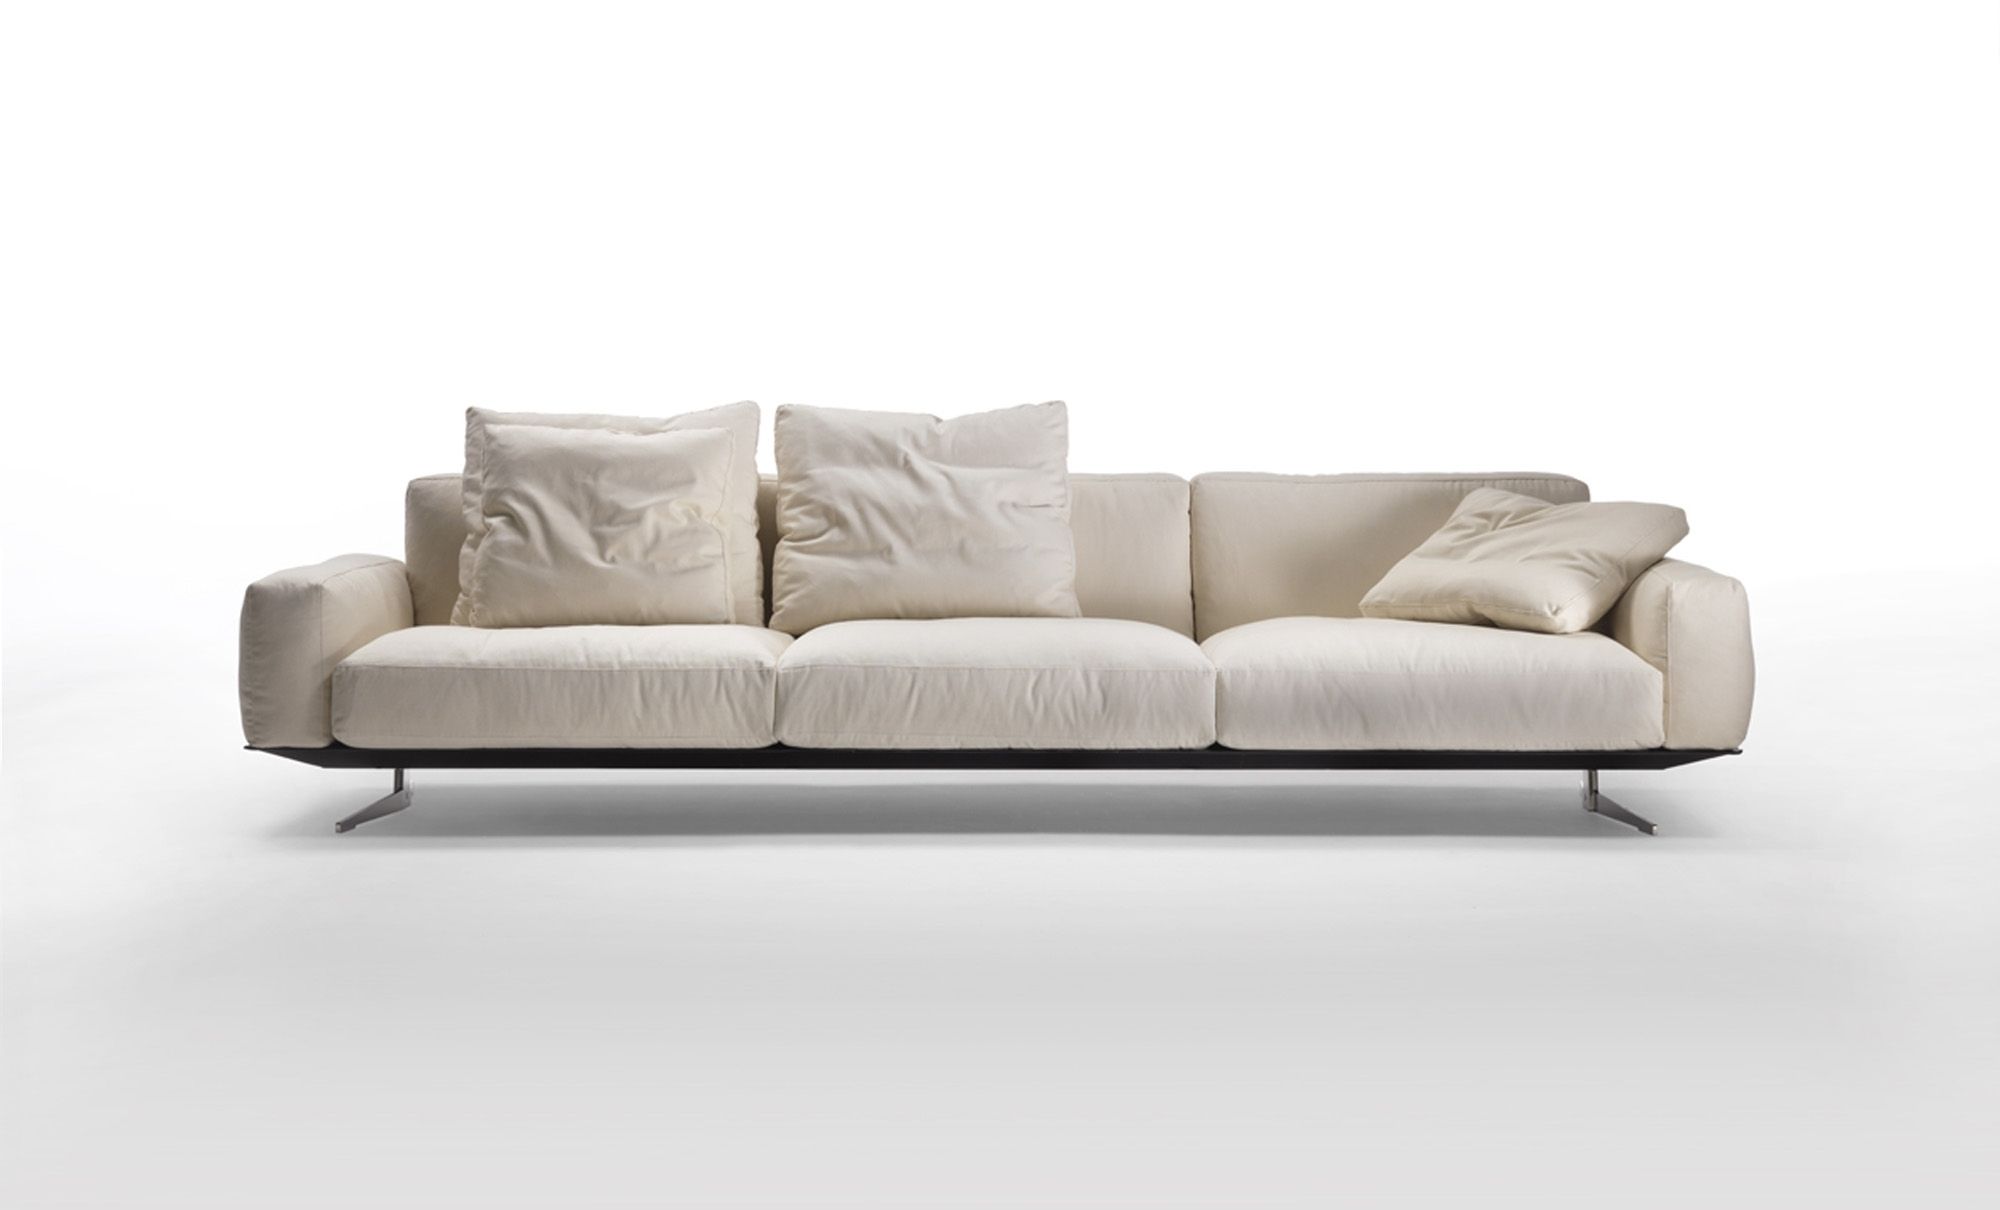 Soft Dream – Sofas – Fanuli Furniture With Regard To Soft Sofas (View 10 of 10)